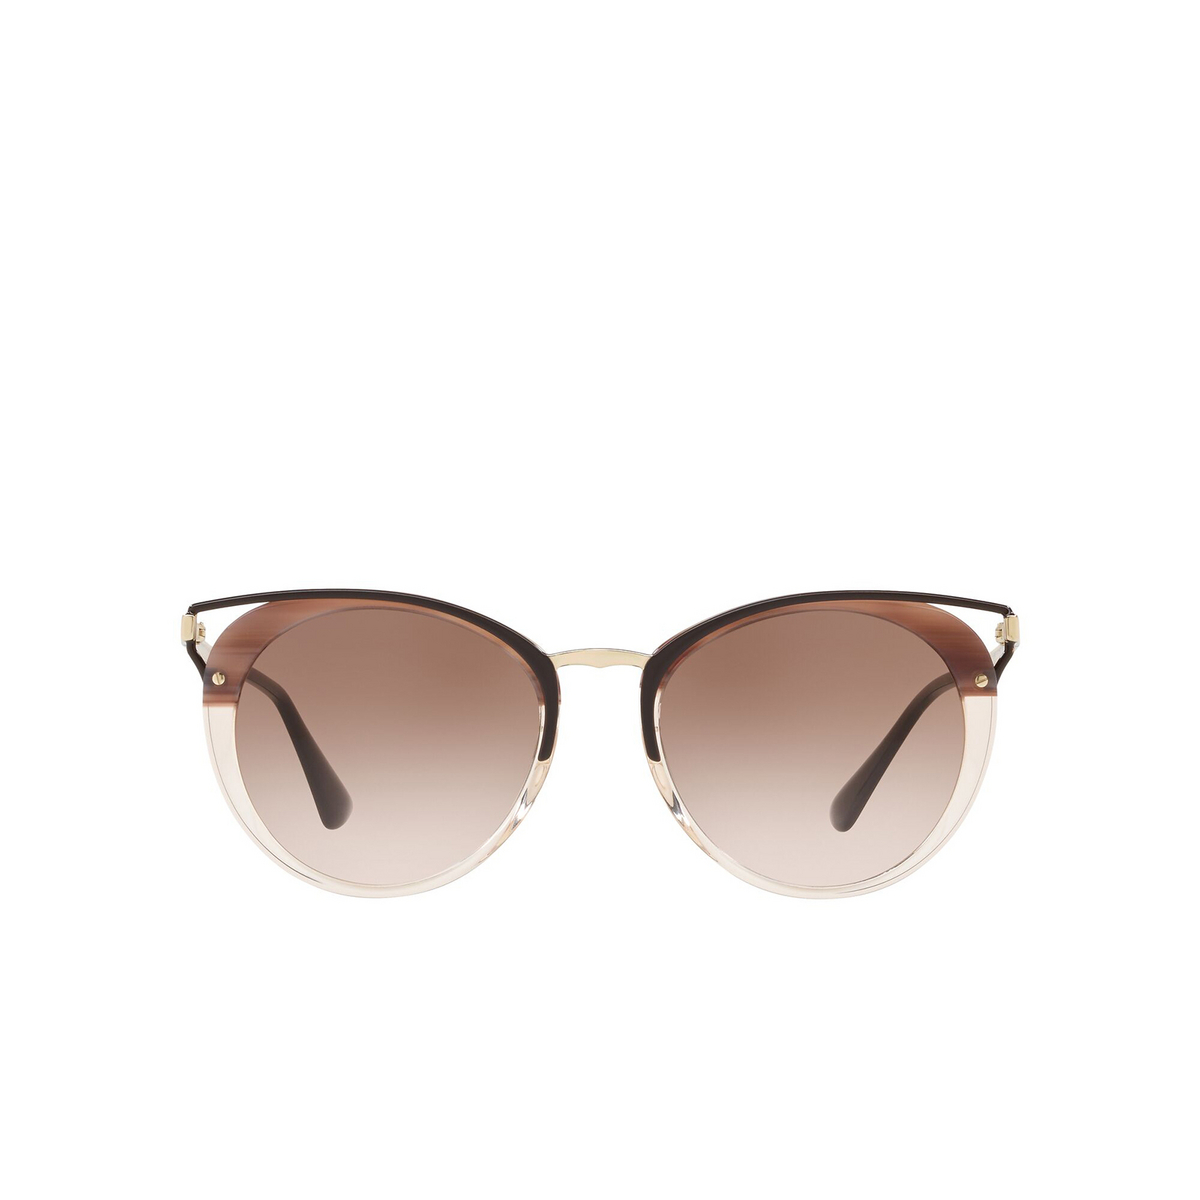 Prada® Cat-eye Sunglasses: PR 66TS color Striped Brown LMN0A6 - front view.